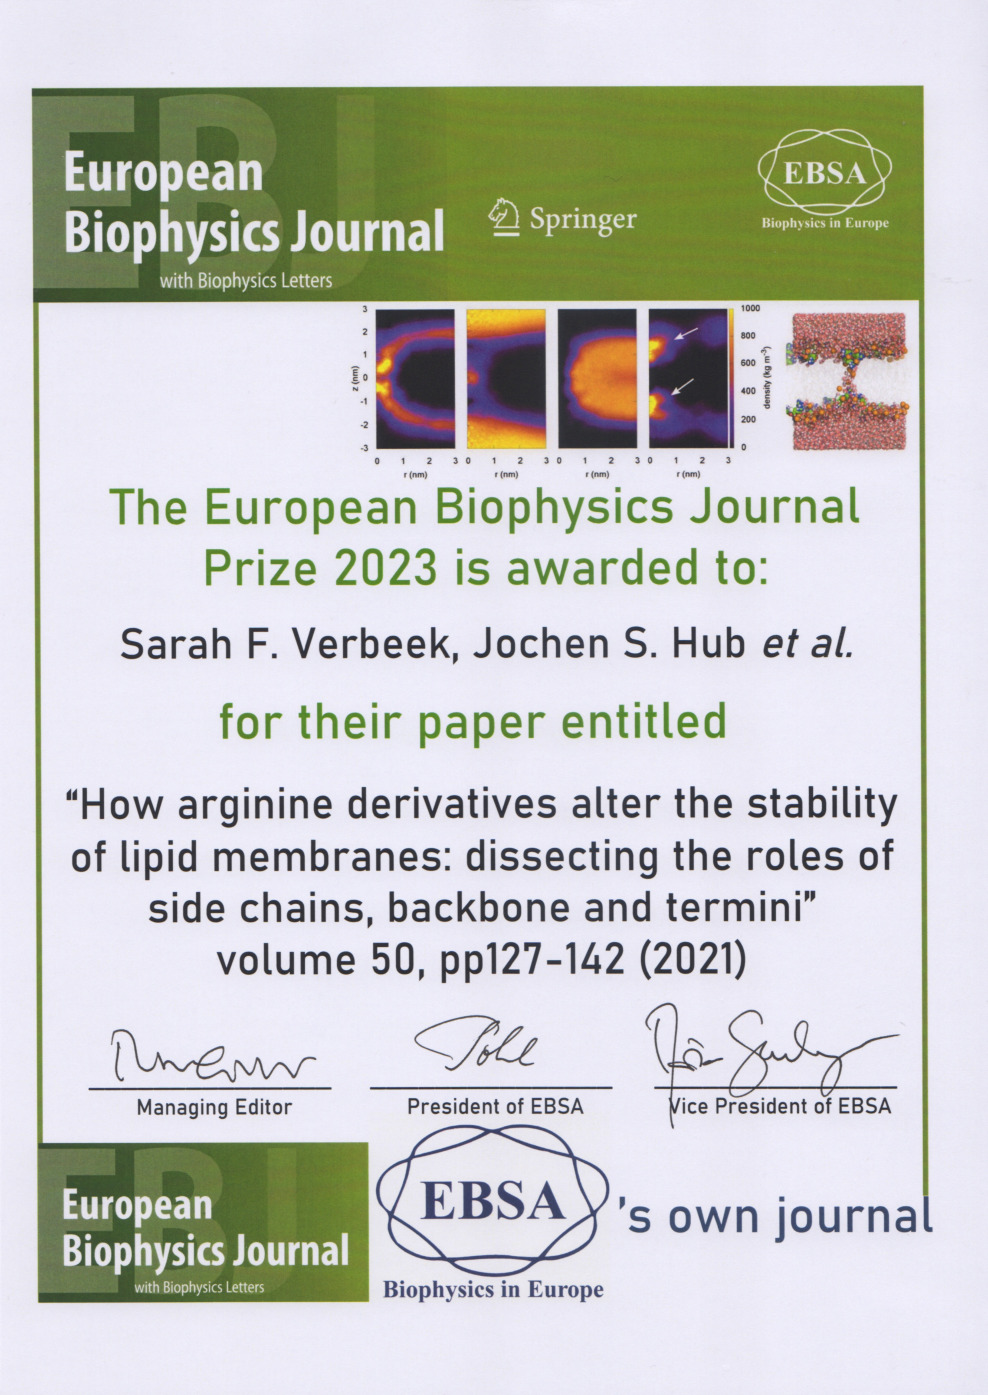 European Biophysics Journal Price 2023